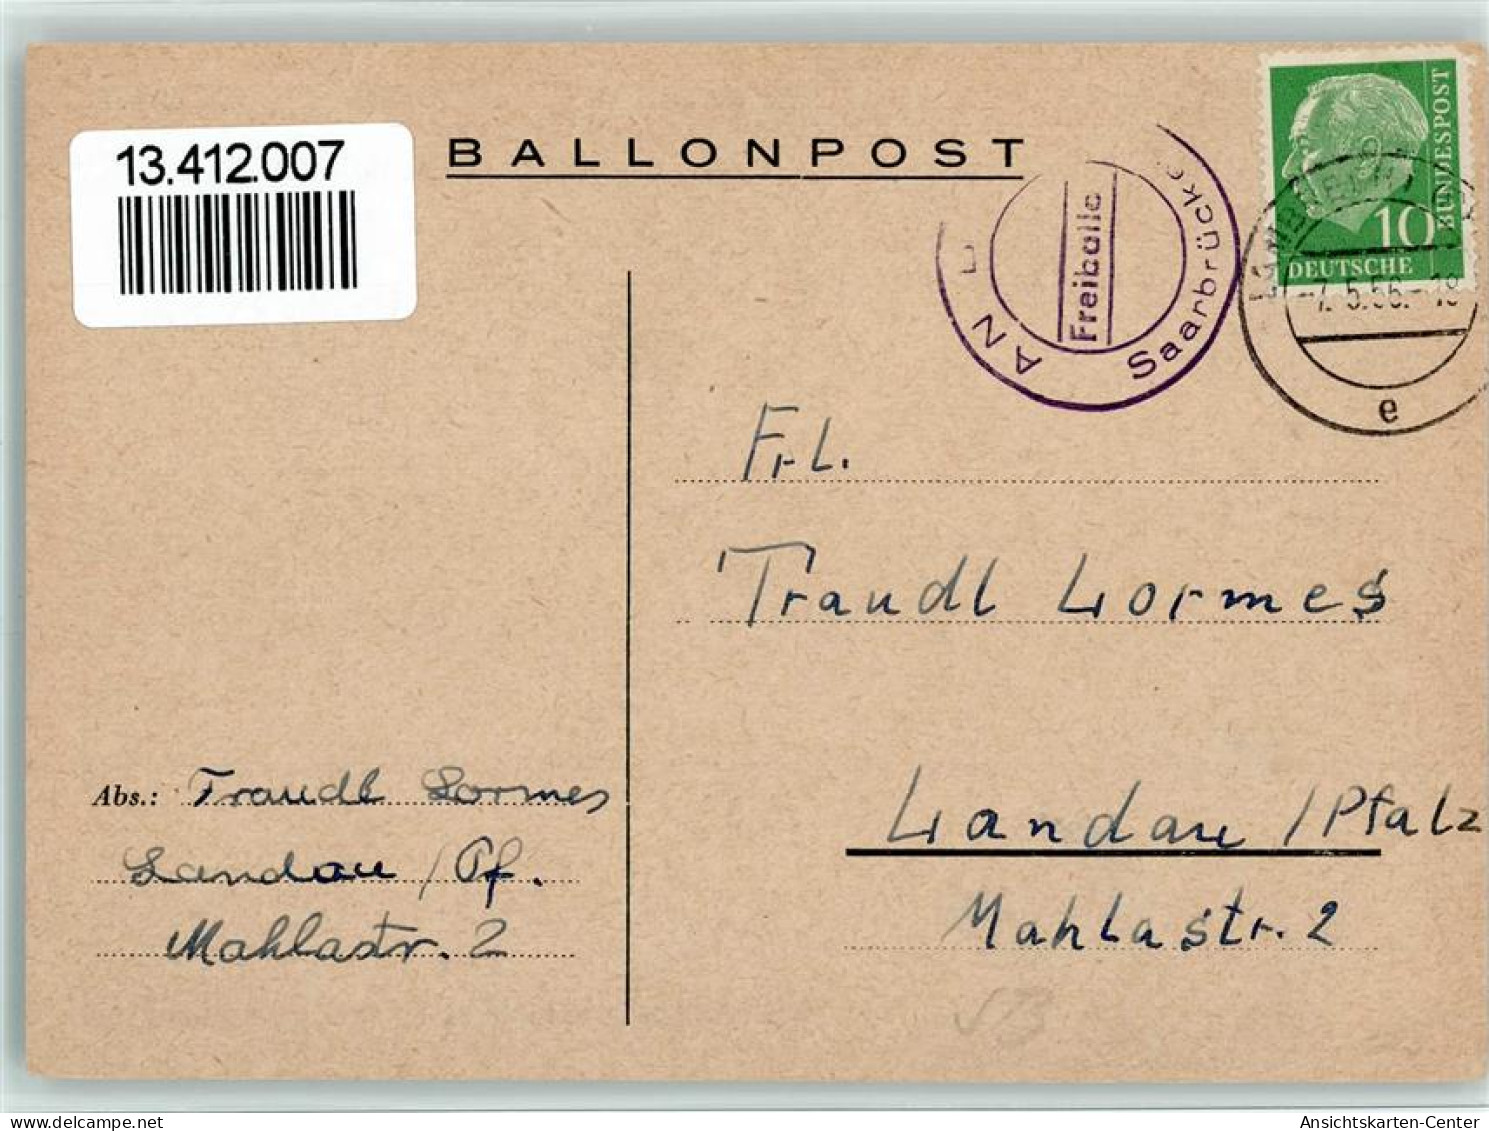 13412007 - Ballonpost Freiiballon Saarbruecken 1956 - Fesselballons